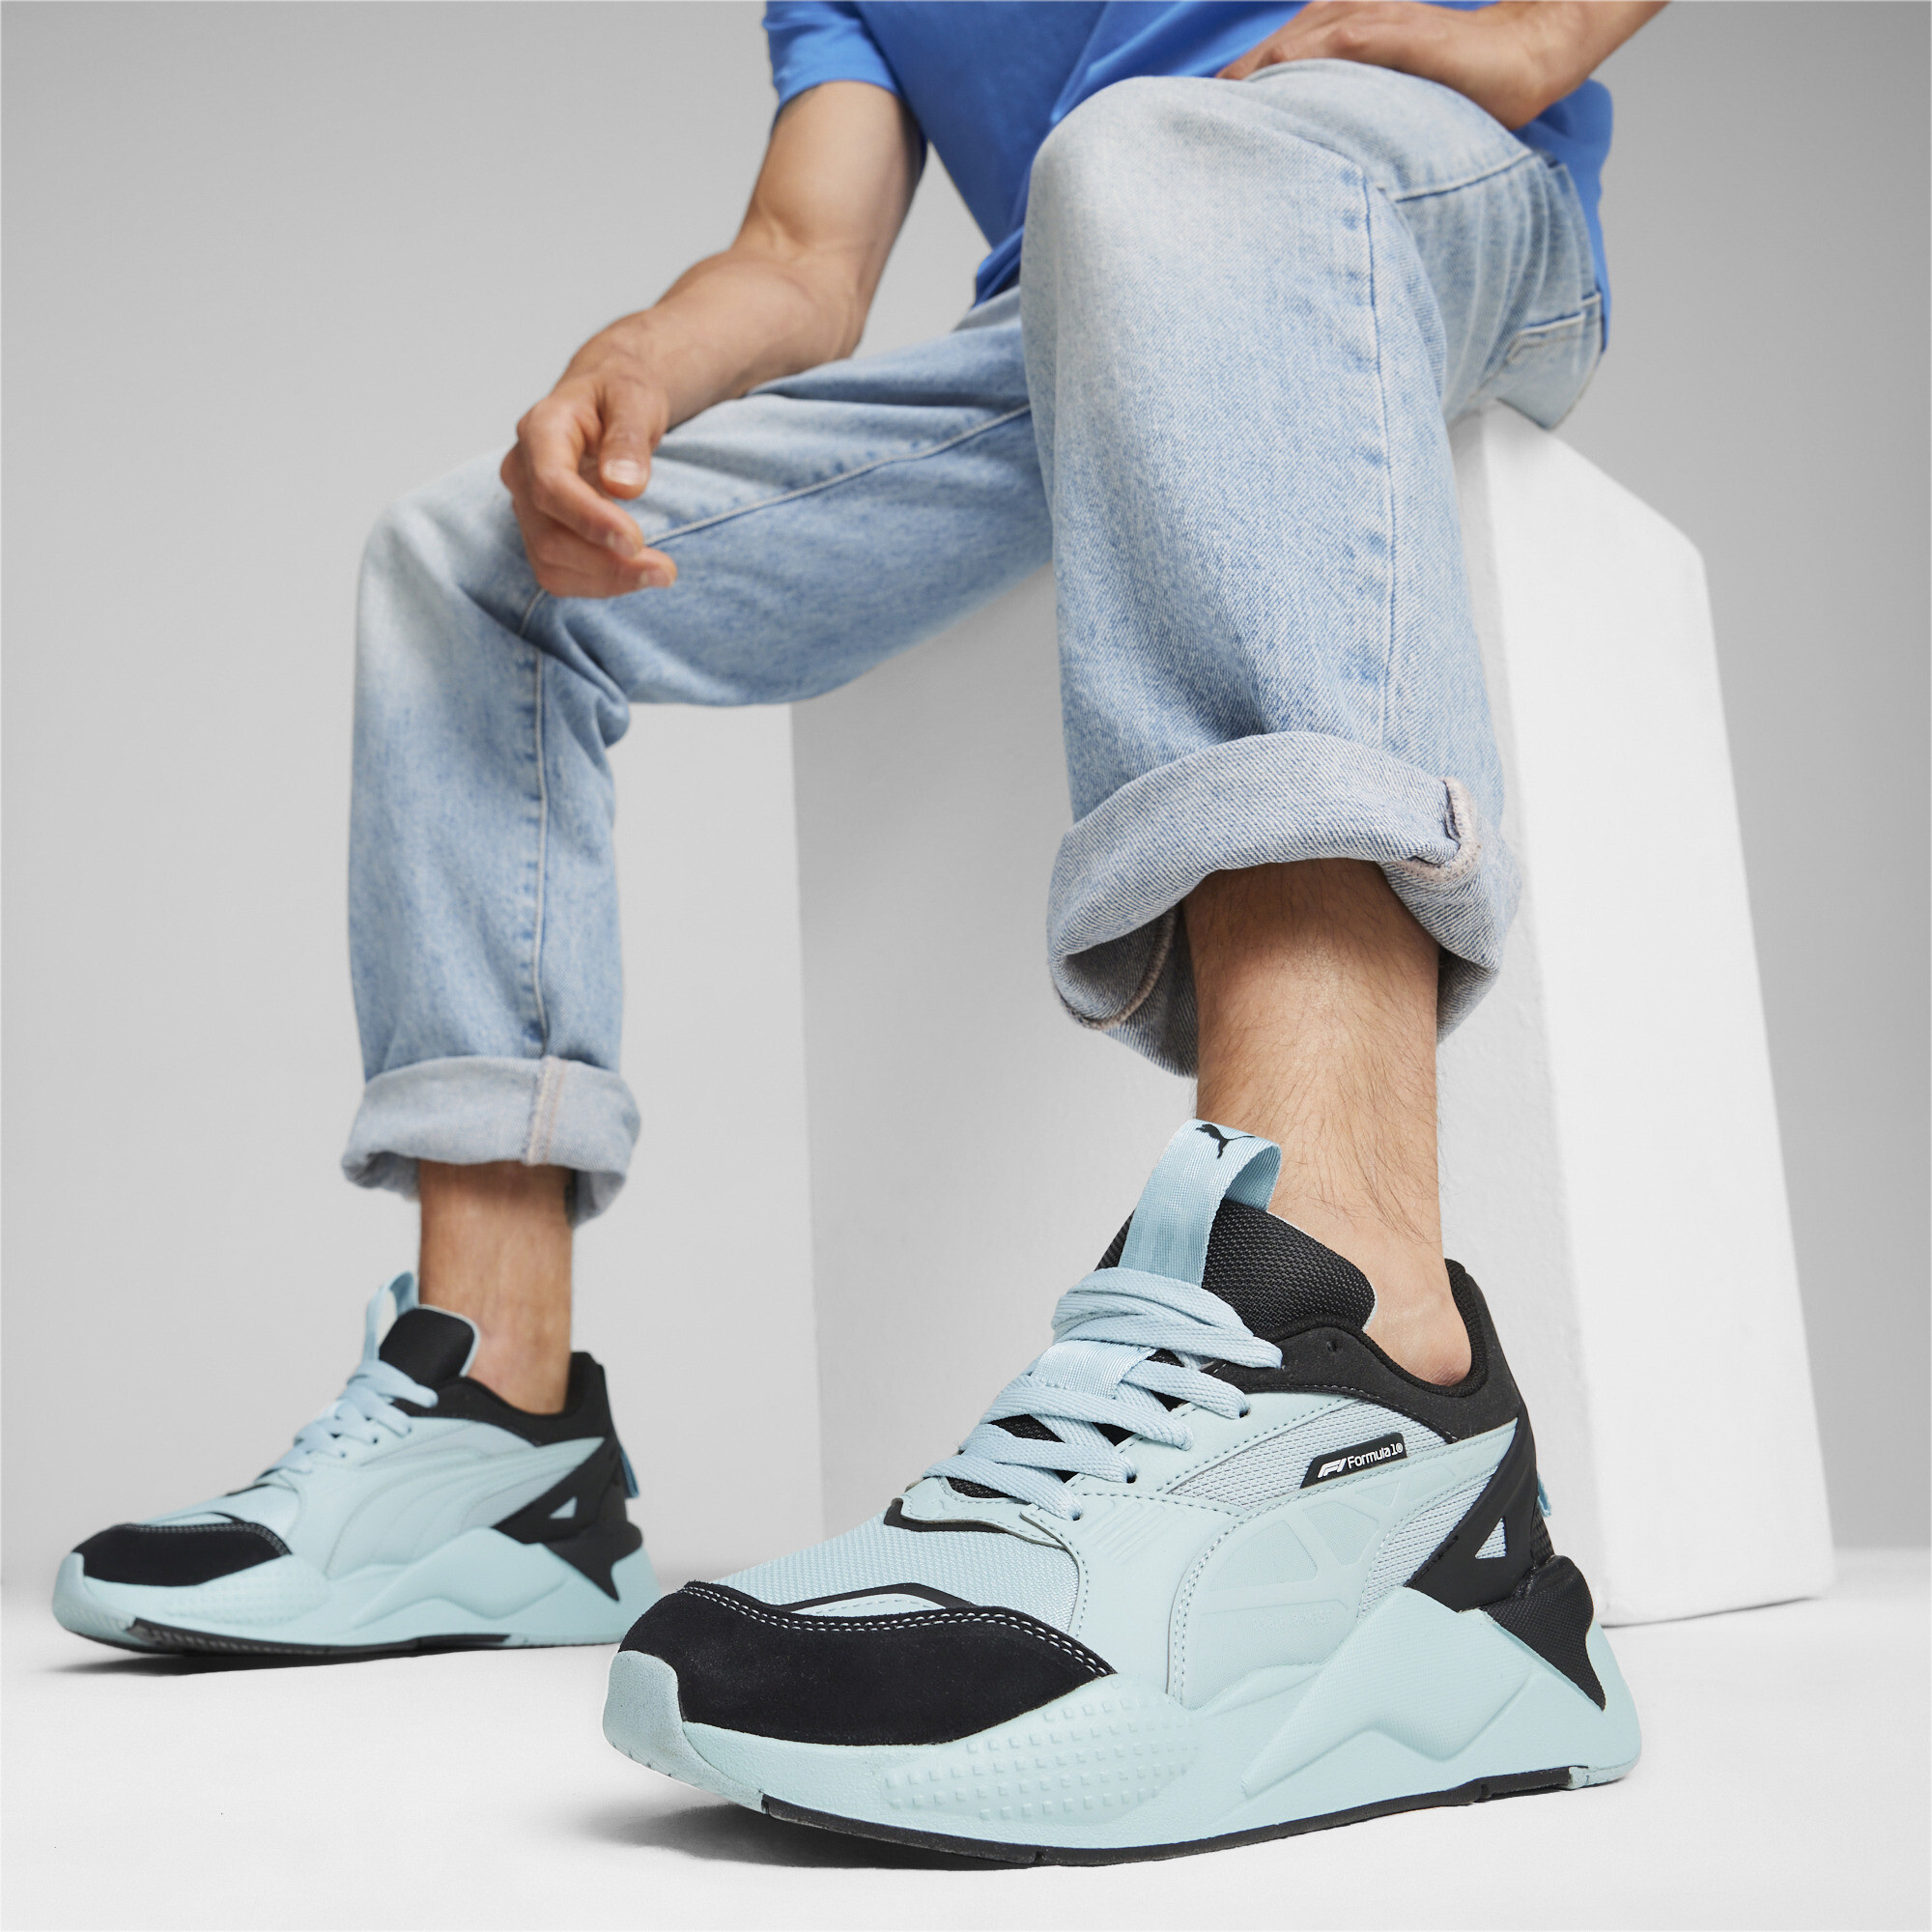 Puma X F1Â® RS-X T Sneakers, Blue, Size 40, Shoes